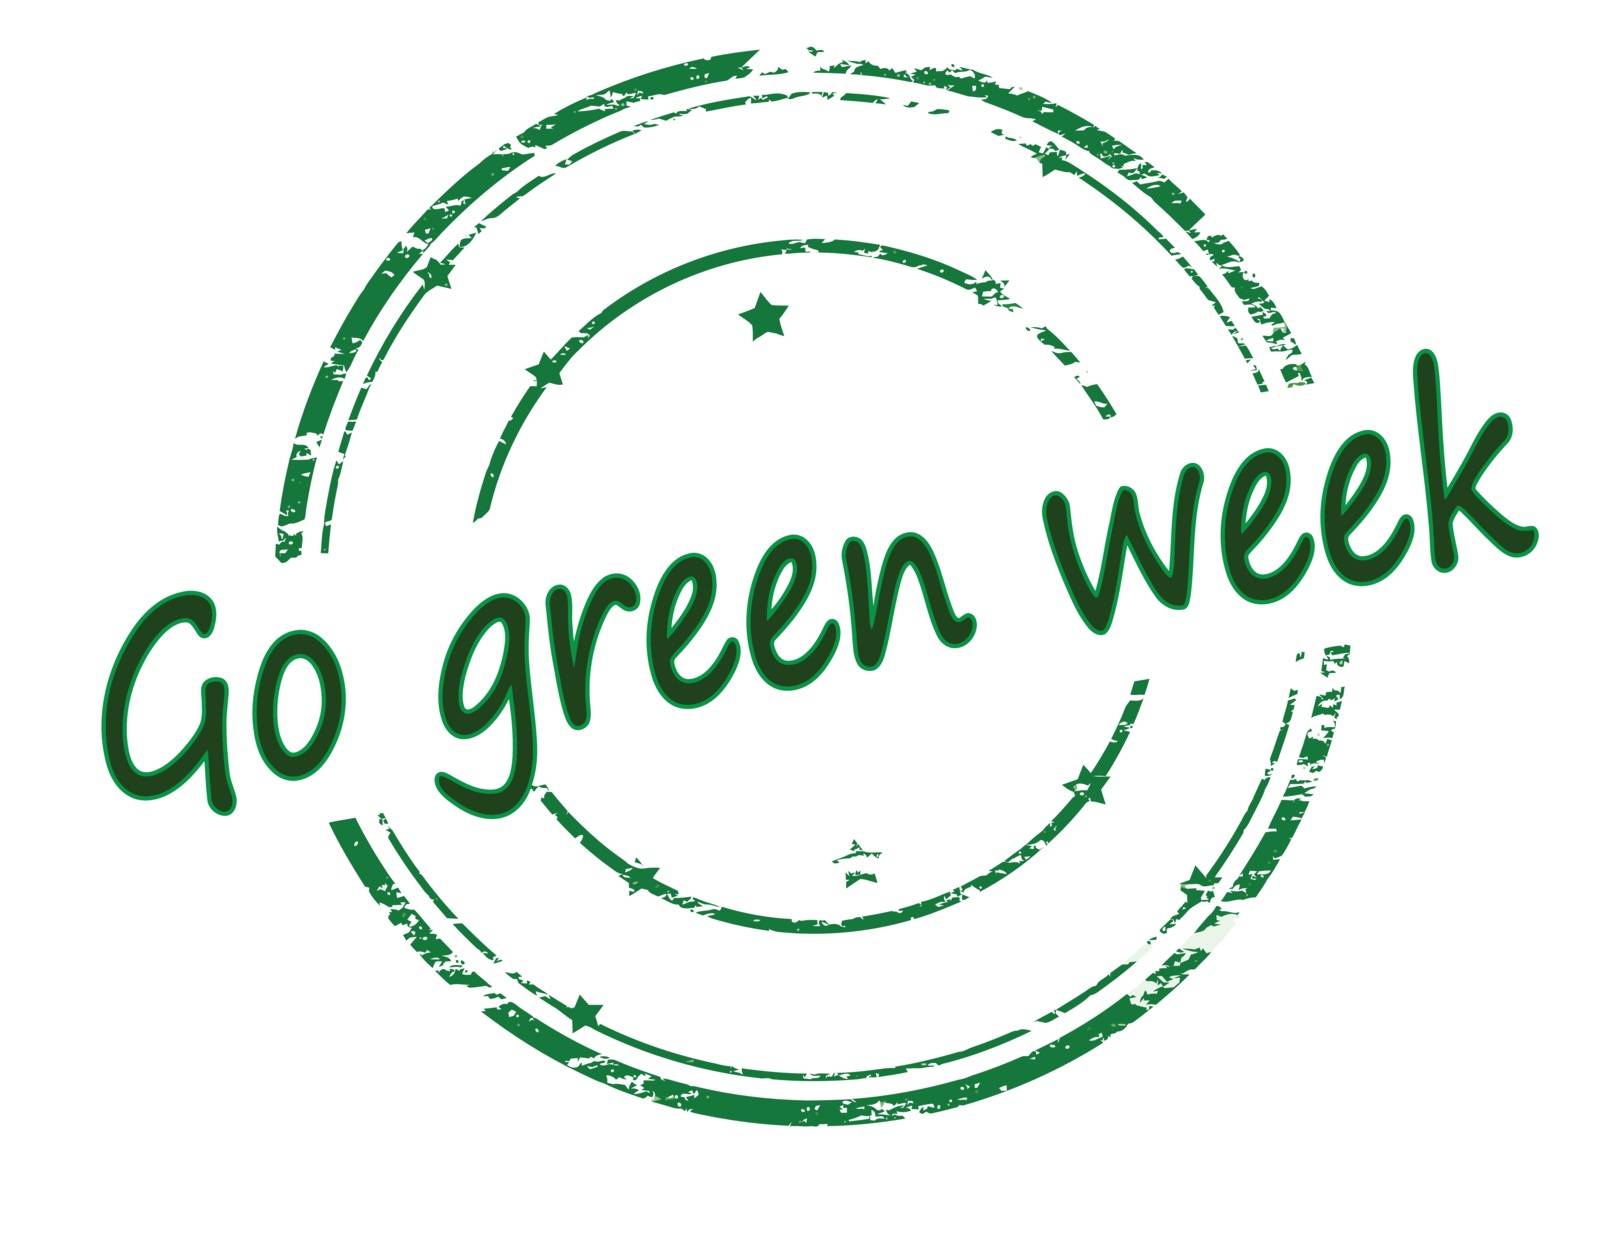 Go green week by carmenbobo